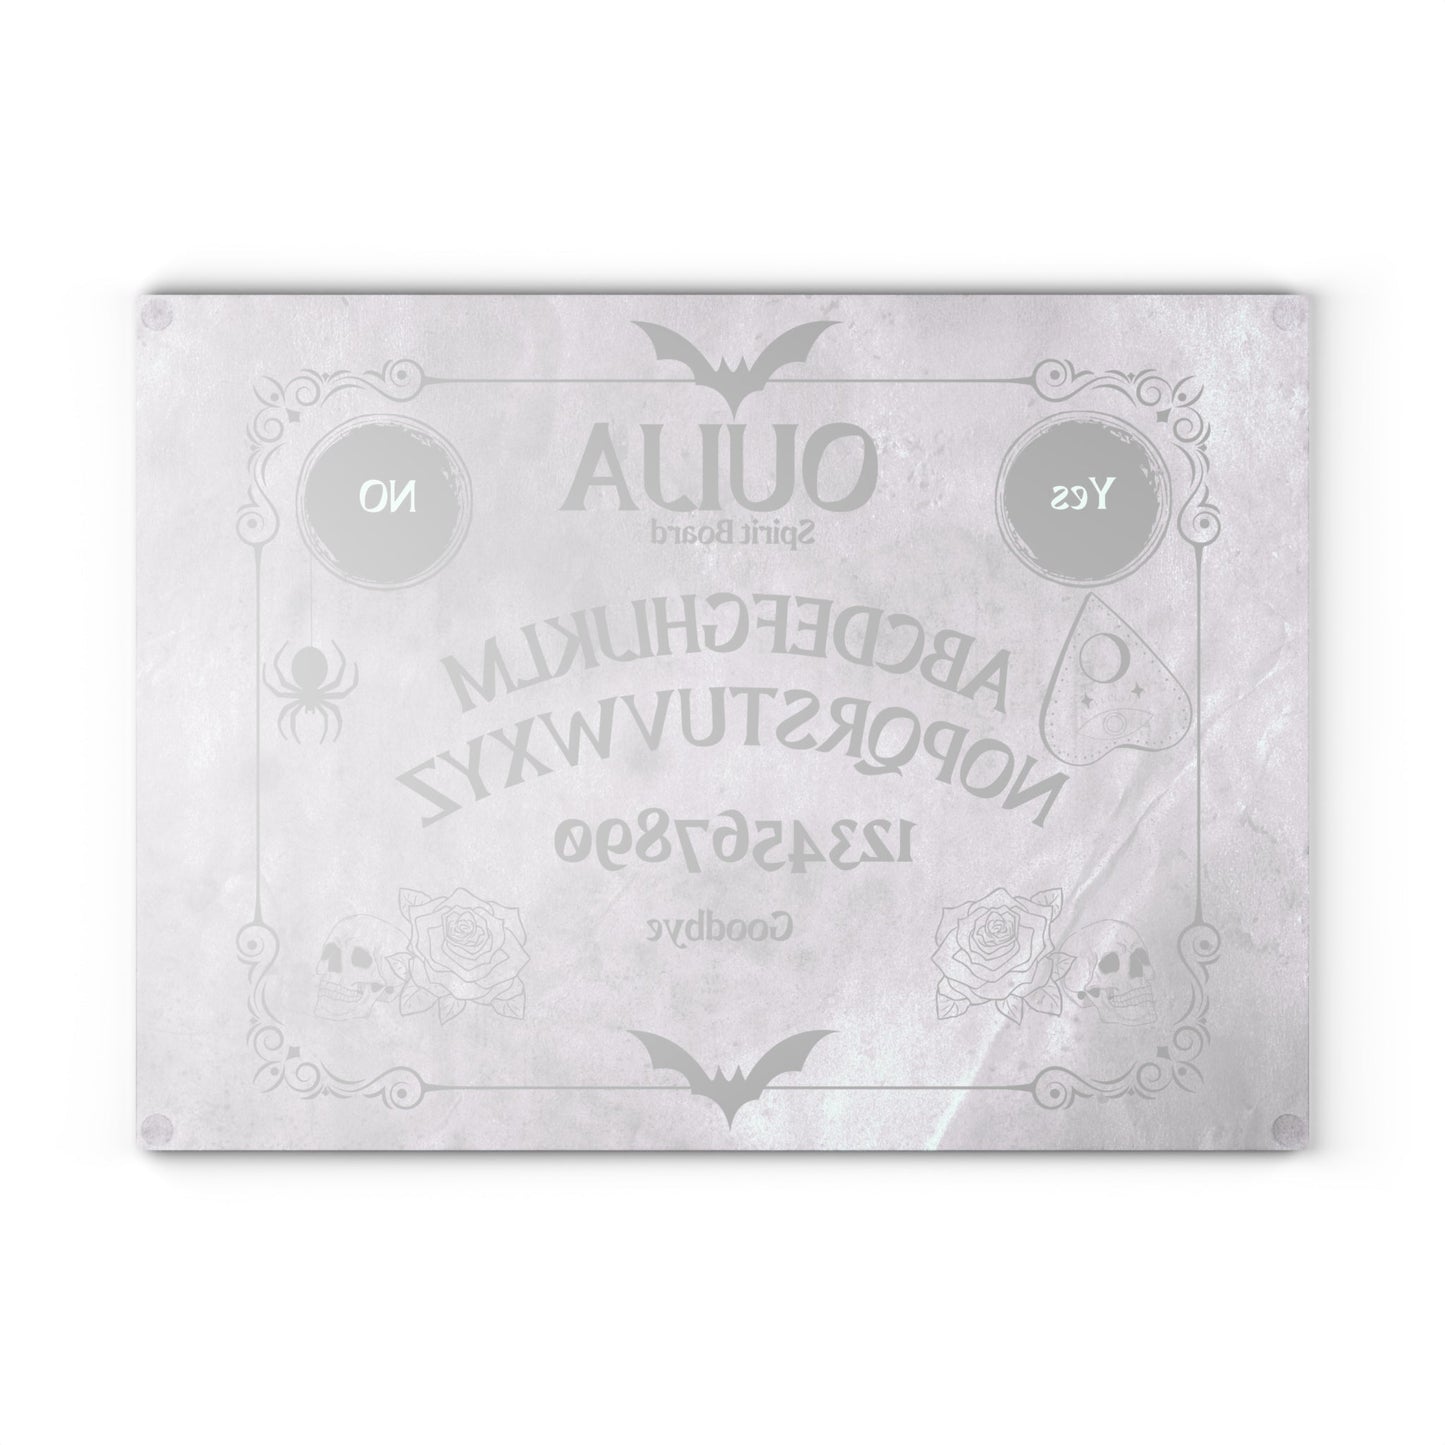 Ouija Board Glass Cutting BoardHome DecorVTZdesigns8" x 11"RectangleAccessoriesCookingGlass